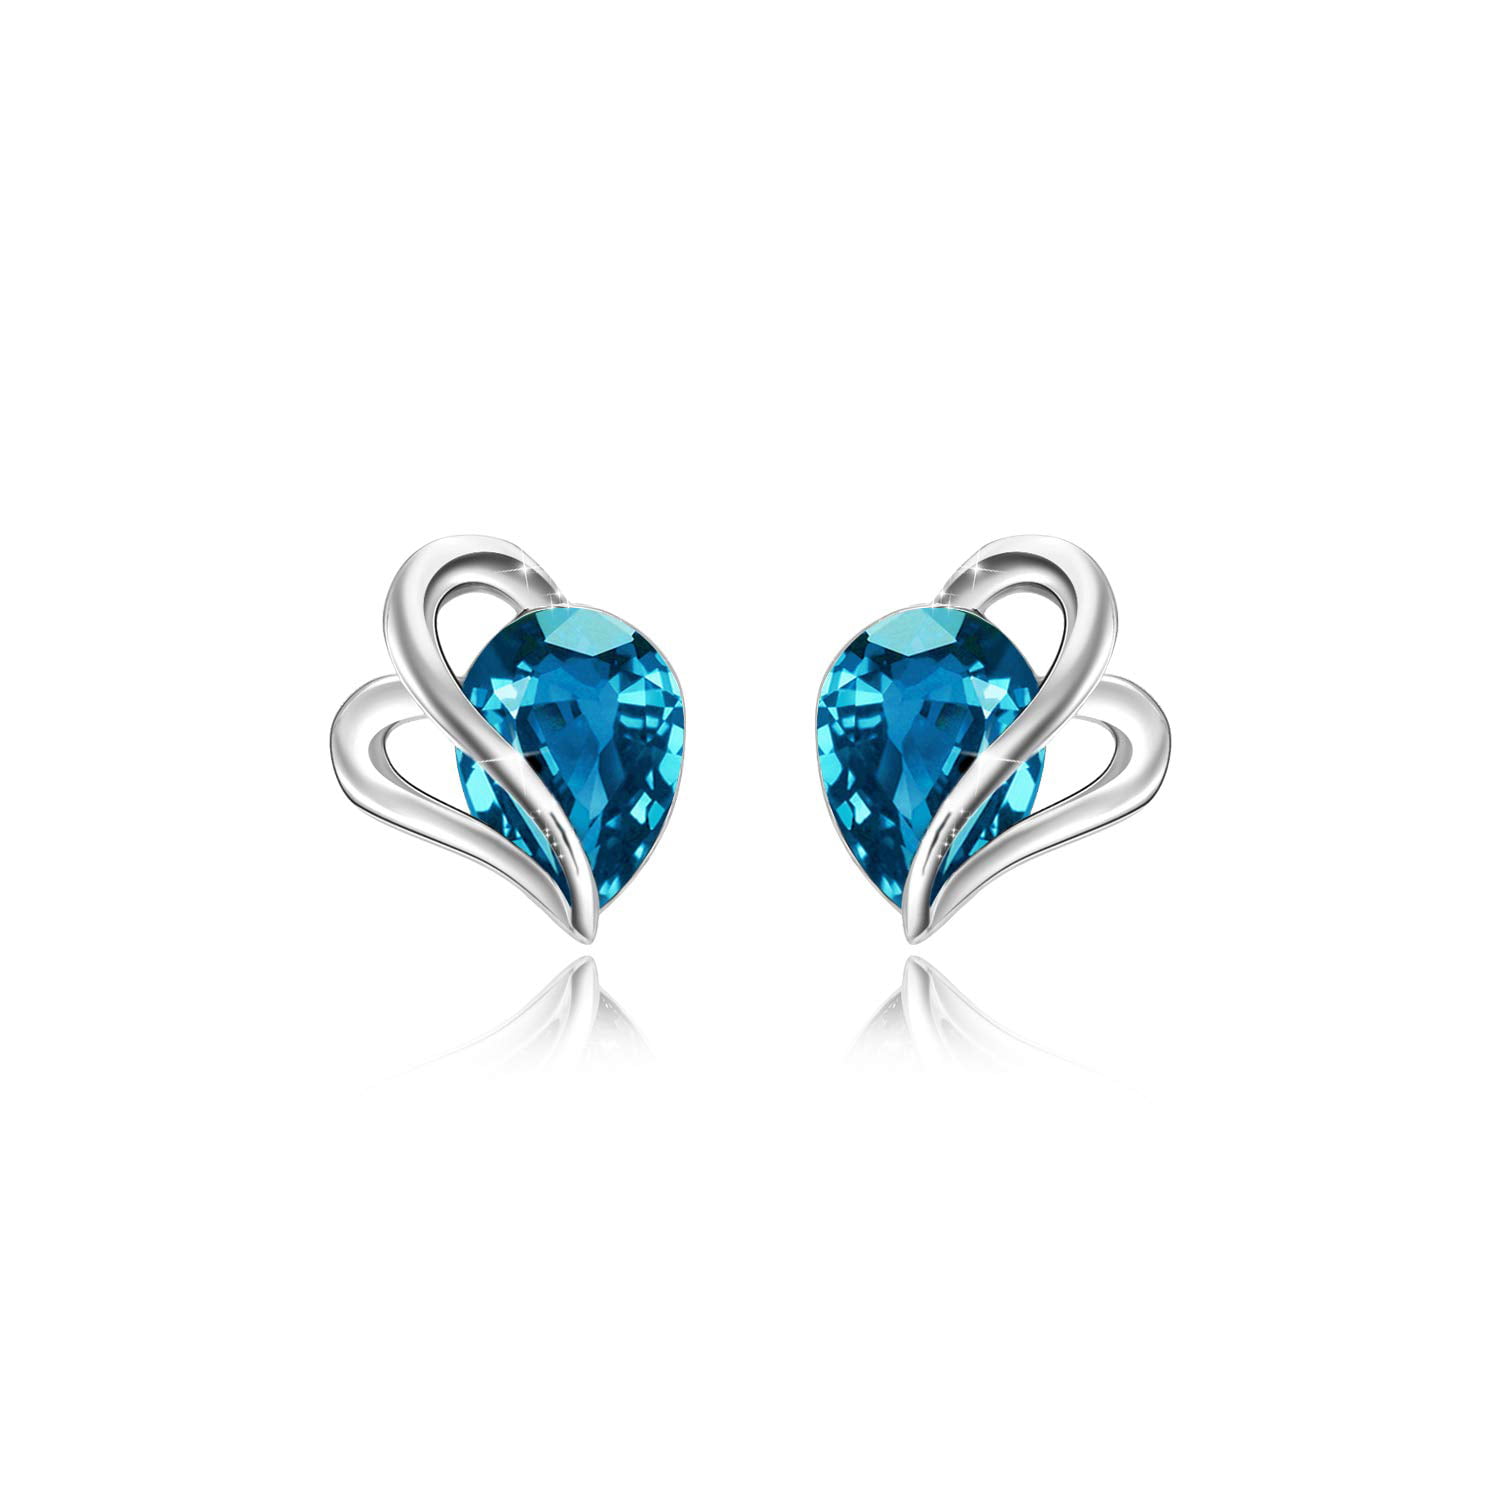 Blue Crystal Studs 12mm Denim Blue Rivoli Rhinestone Earrings Handcrafted with Sparkling Crystals